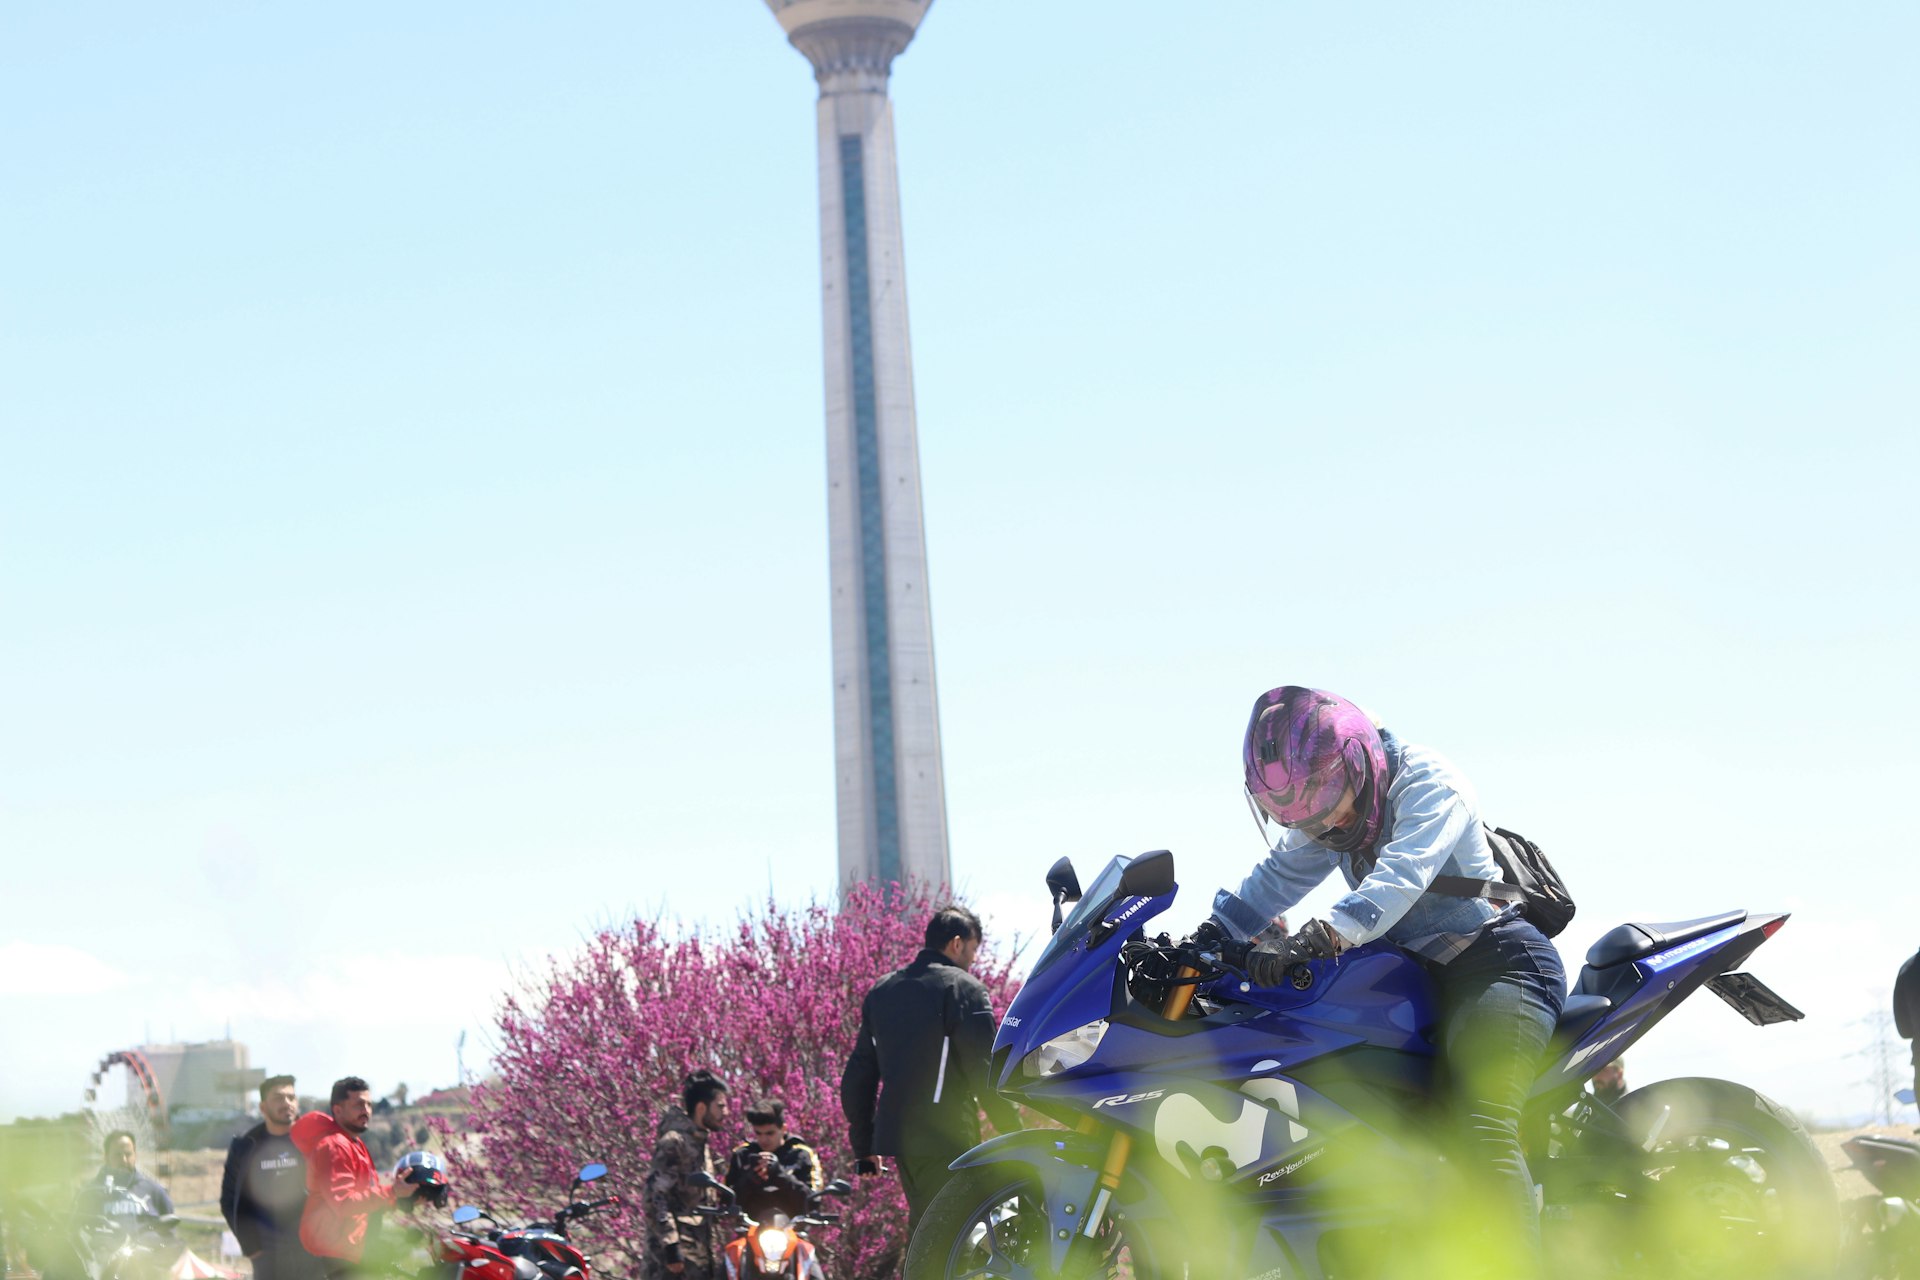 The Iranian motorbike champion fighting gender discrimination